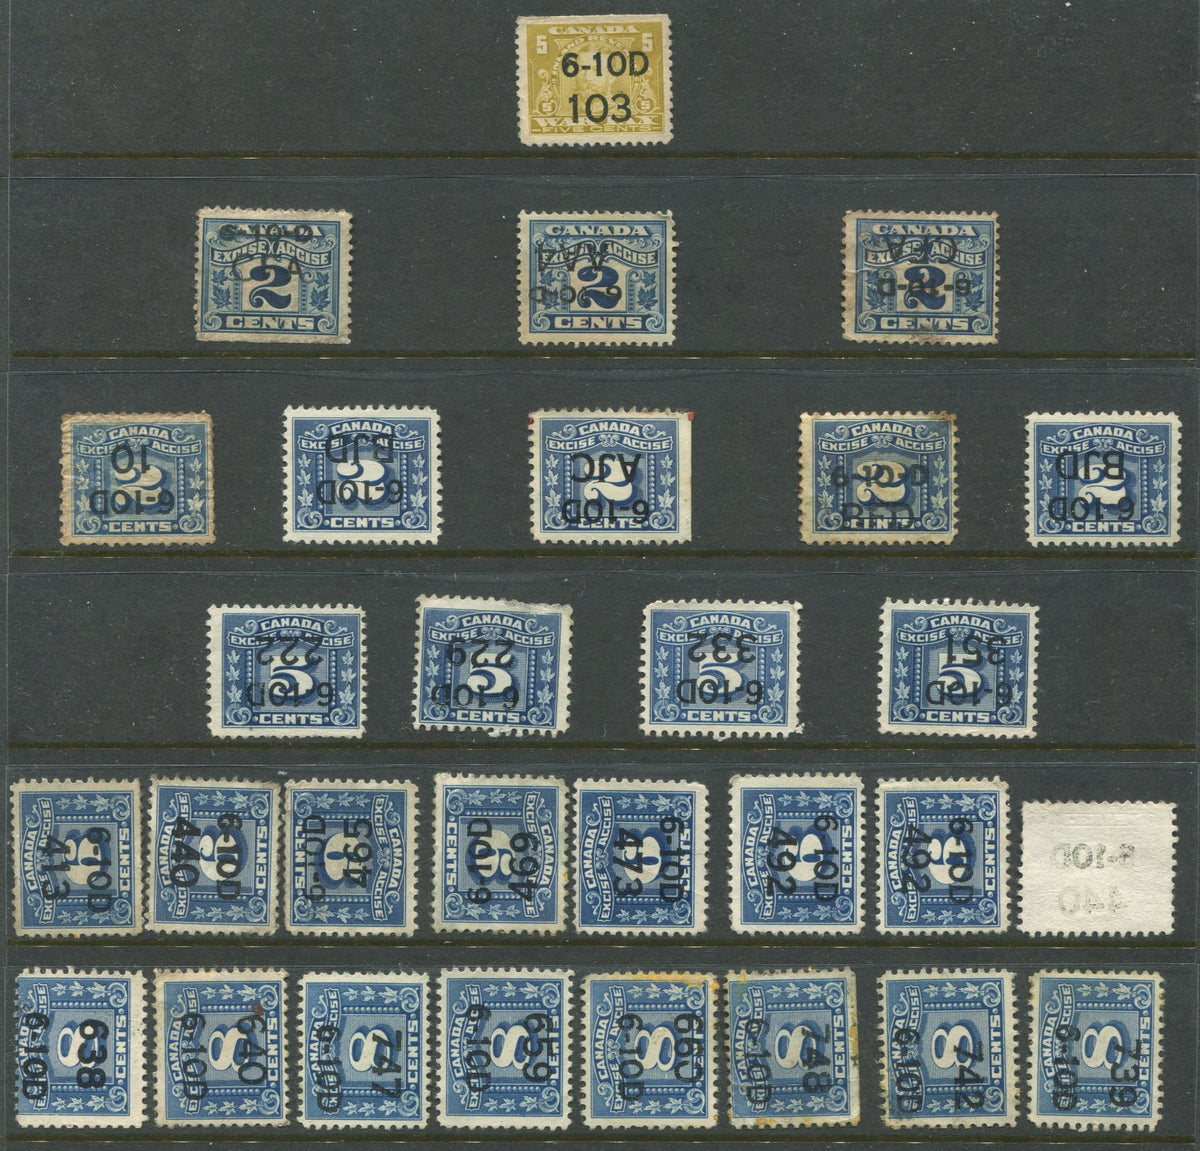 0036FX1904 - Canada Excise Stamp Precancel Collection